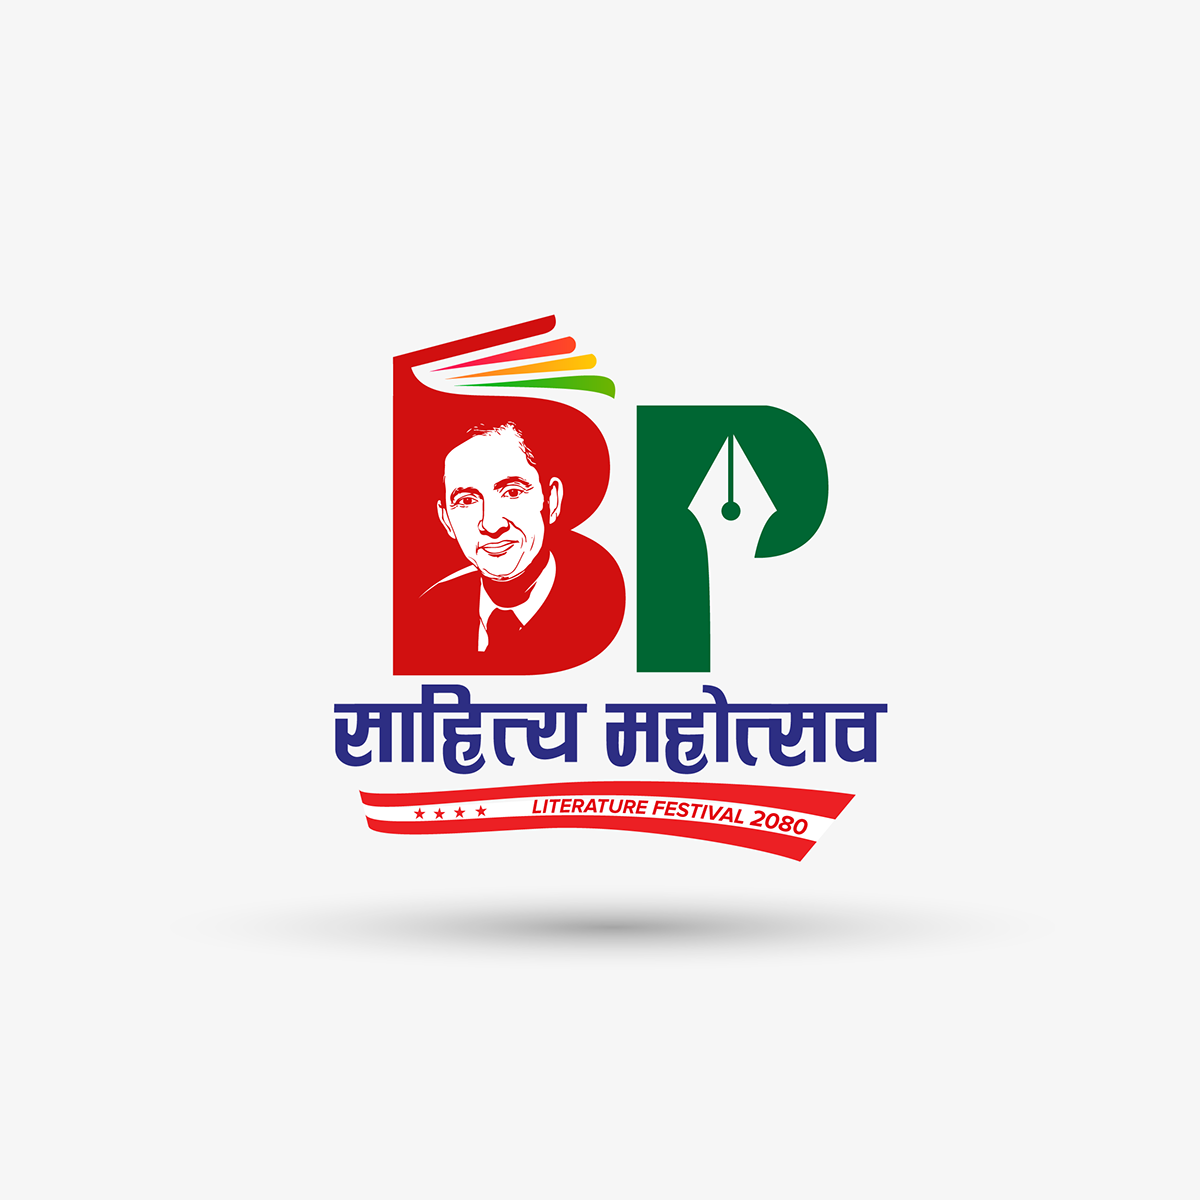 political mnemonic nepali designer political logo BP Koirala BPLiteratureFestival2080 kathmandu Literature Festival Nepali Congress Shaktiz work